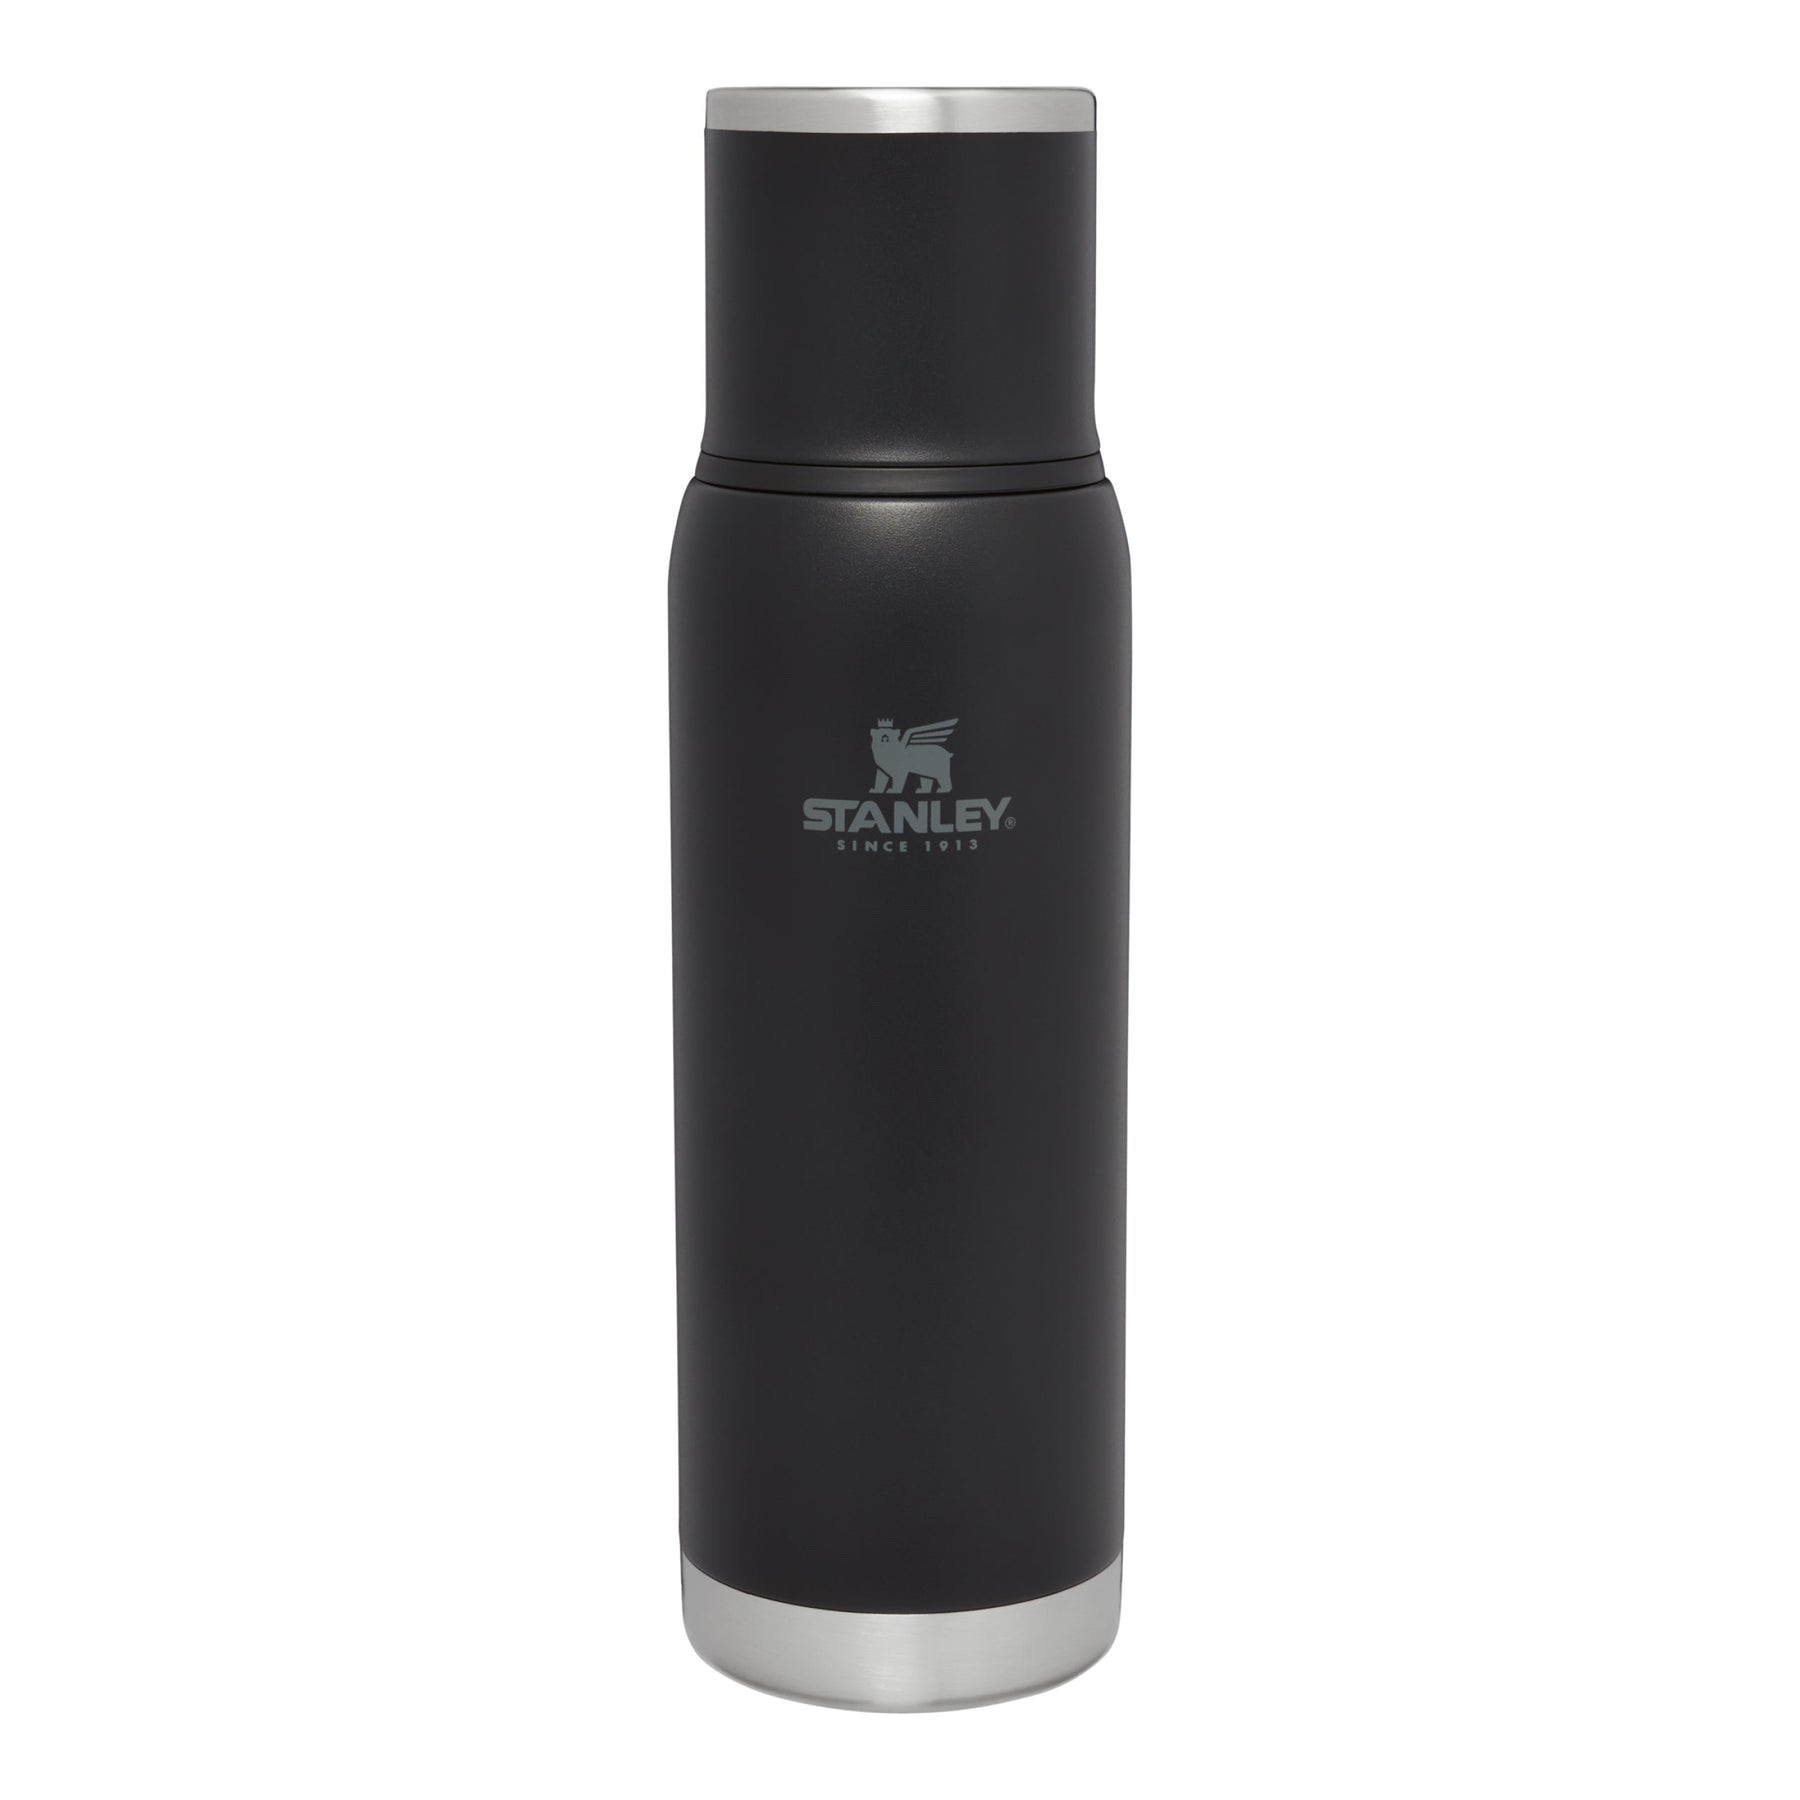 Water decanter 0.75 L black Basic